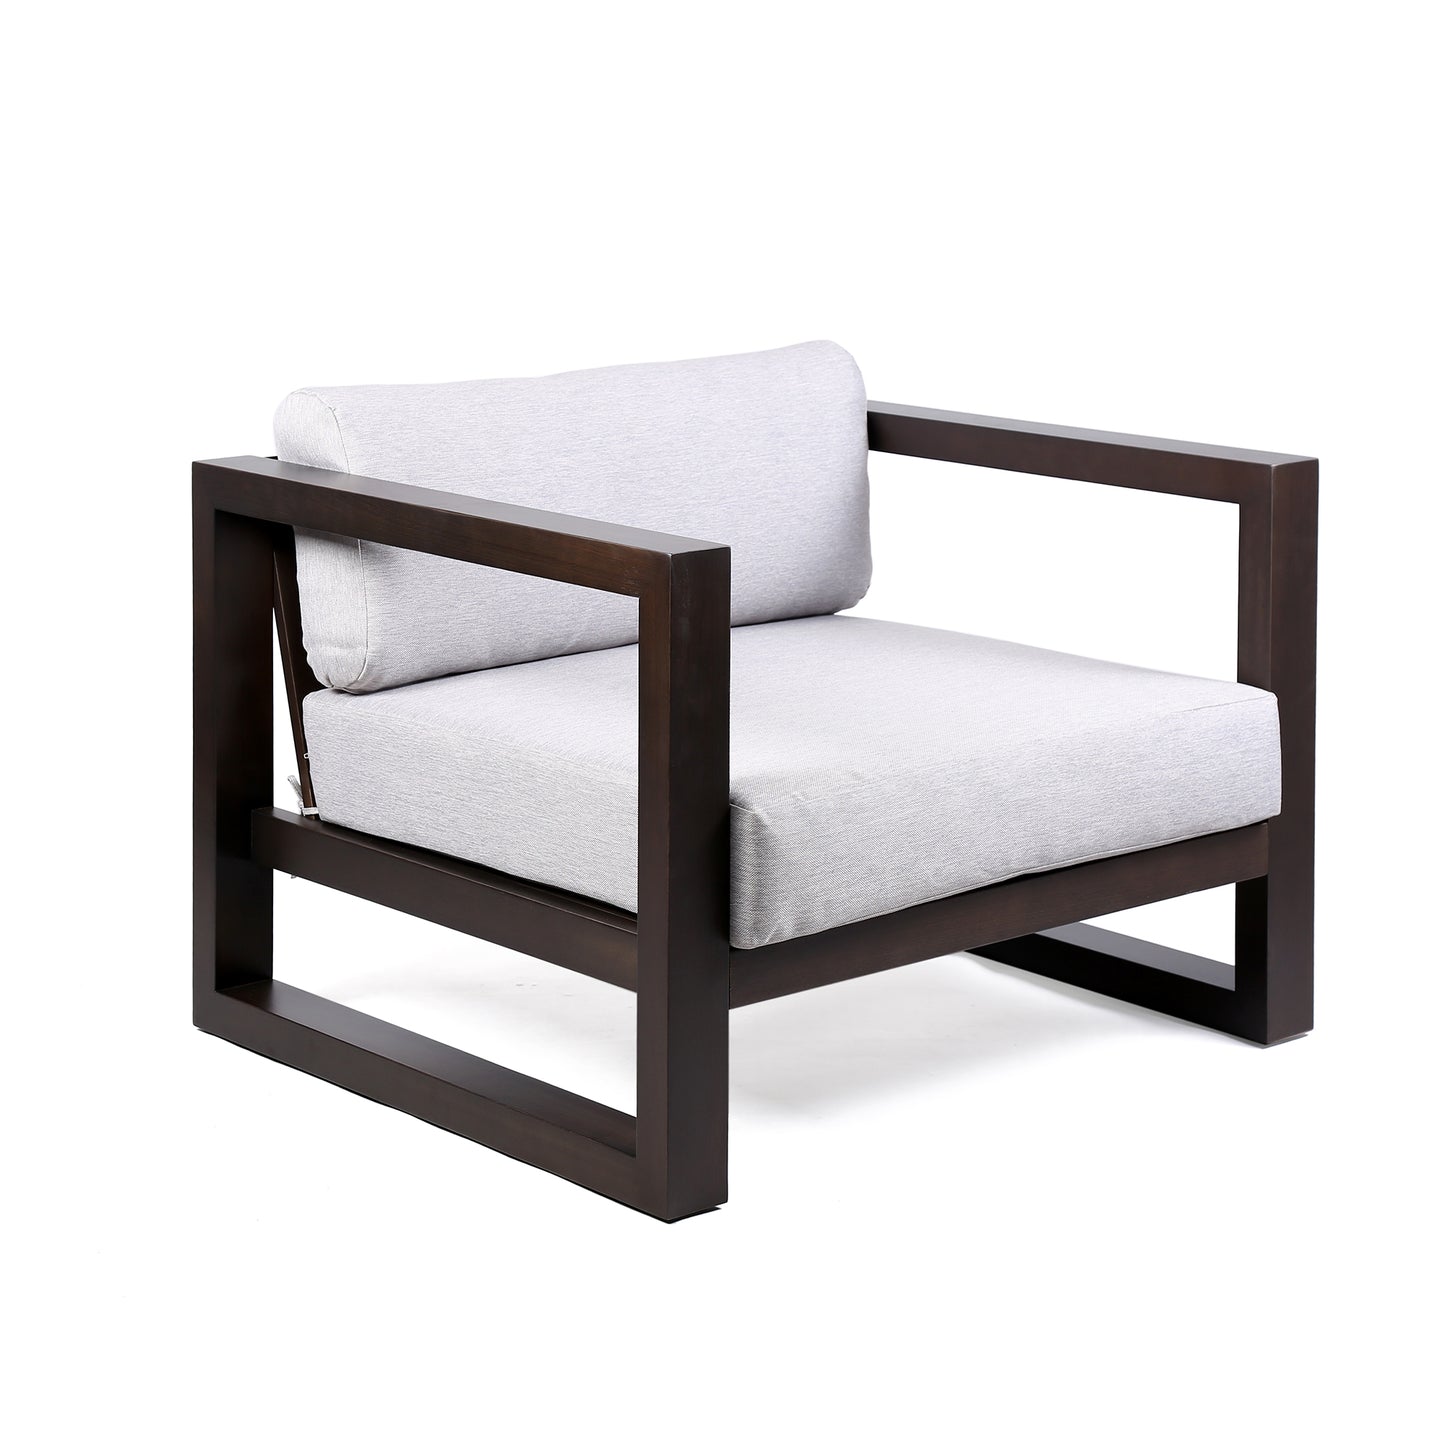 Paradise 4 Piece Outdoor Dark Eucalyptus Wood Sofa Seating Set with Gray Cushions